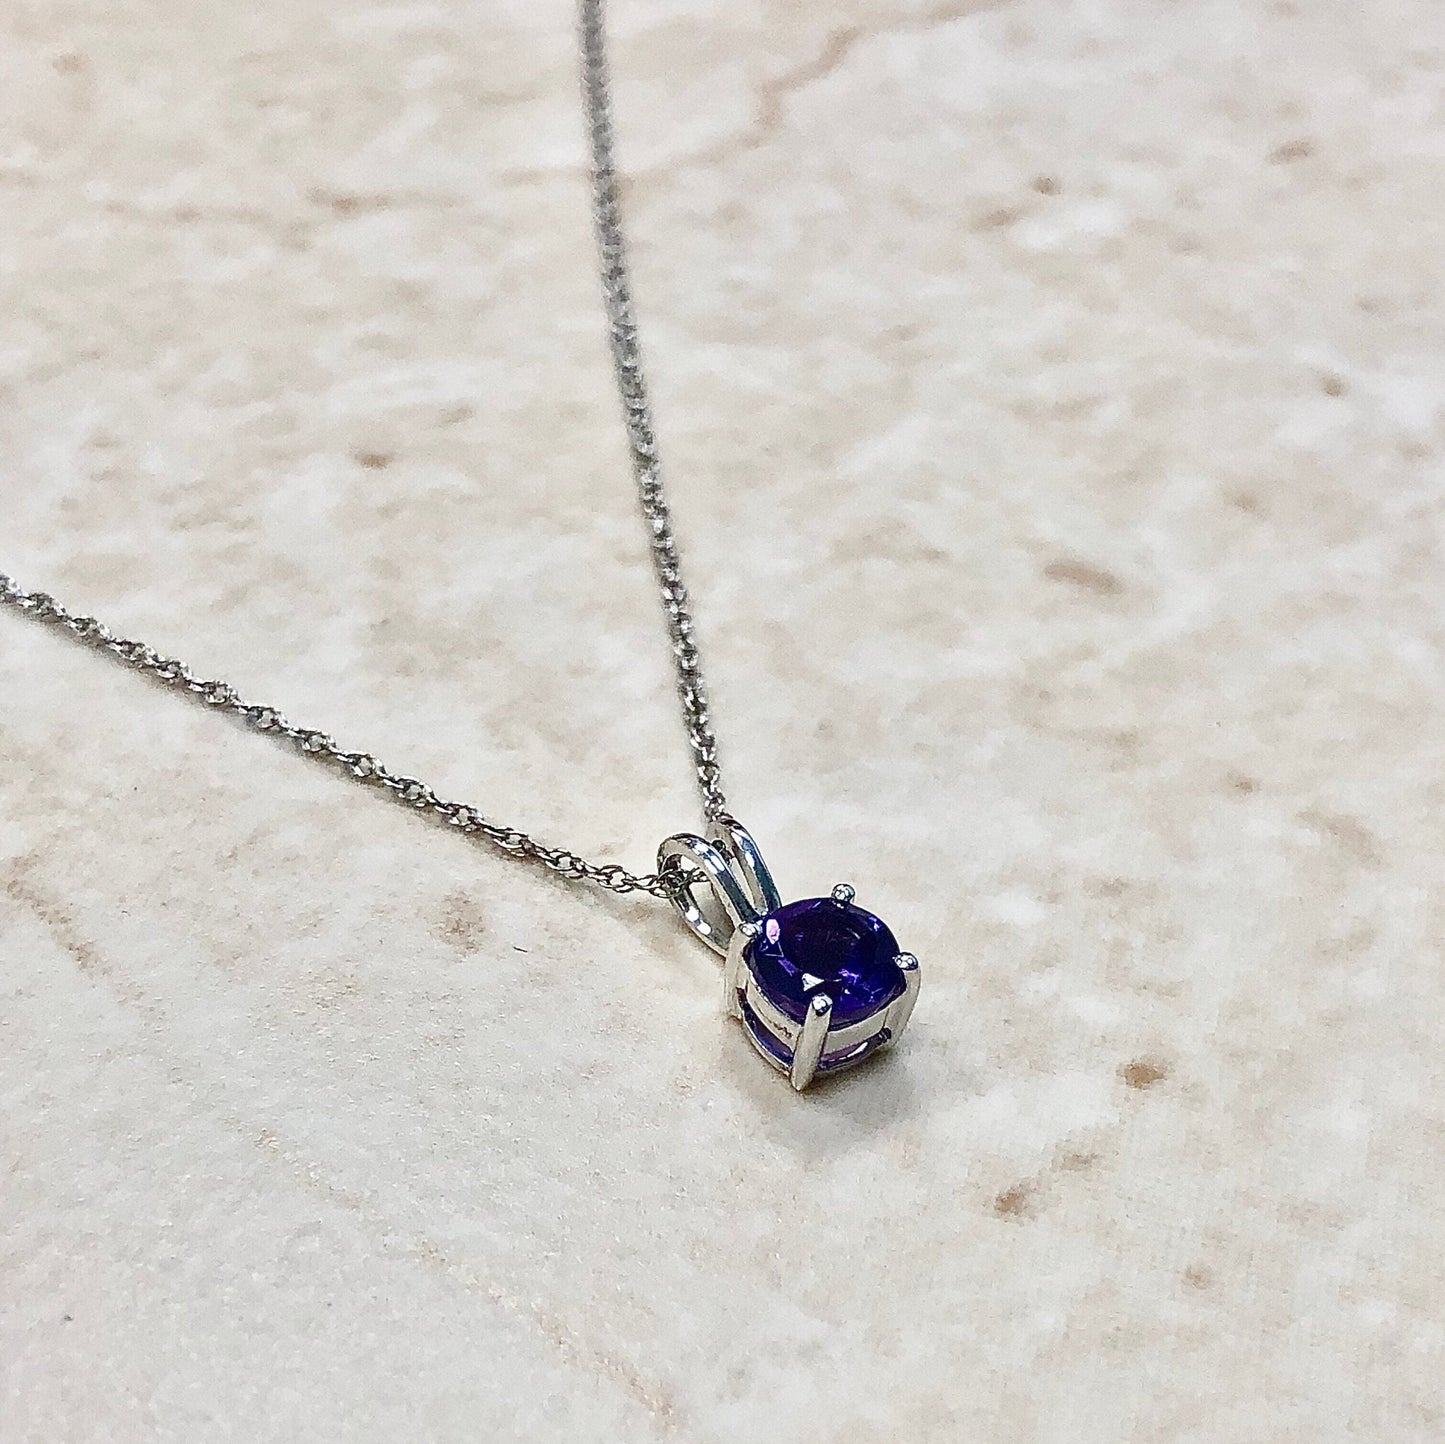 Round Amethyst Pendant Necklace - 14 Karat White Gold - February Birthstone - Genuine Gemstone - 18” Chain - Birthday Gift